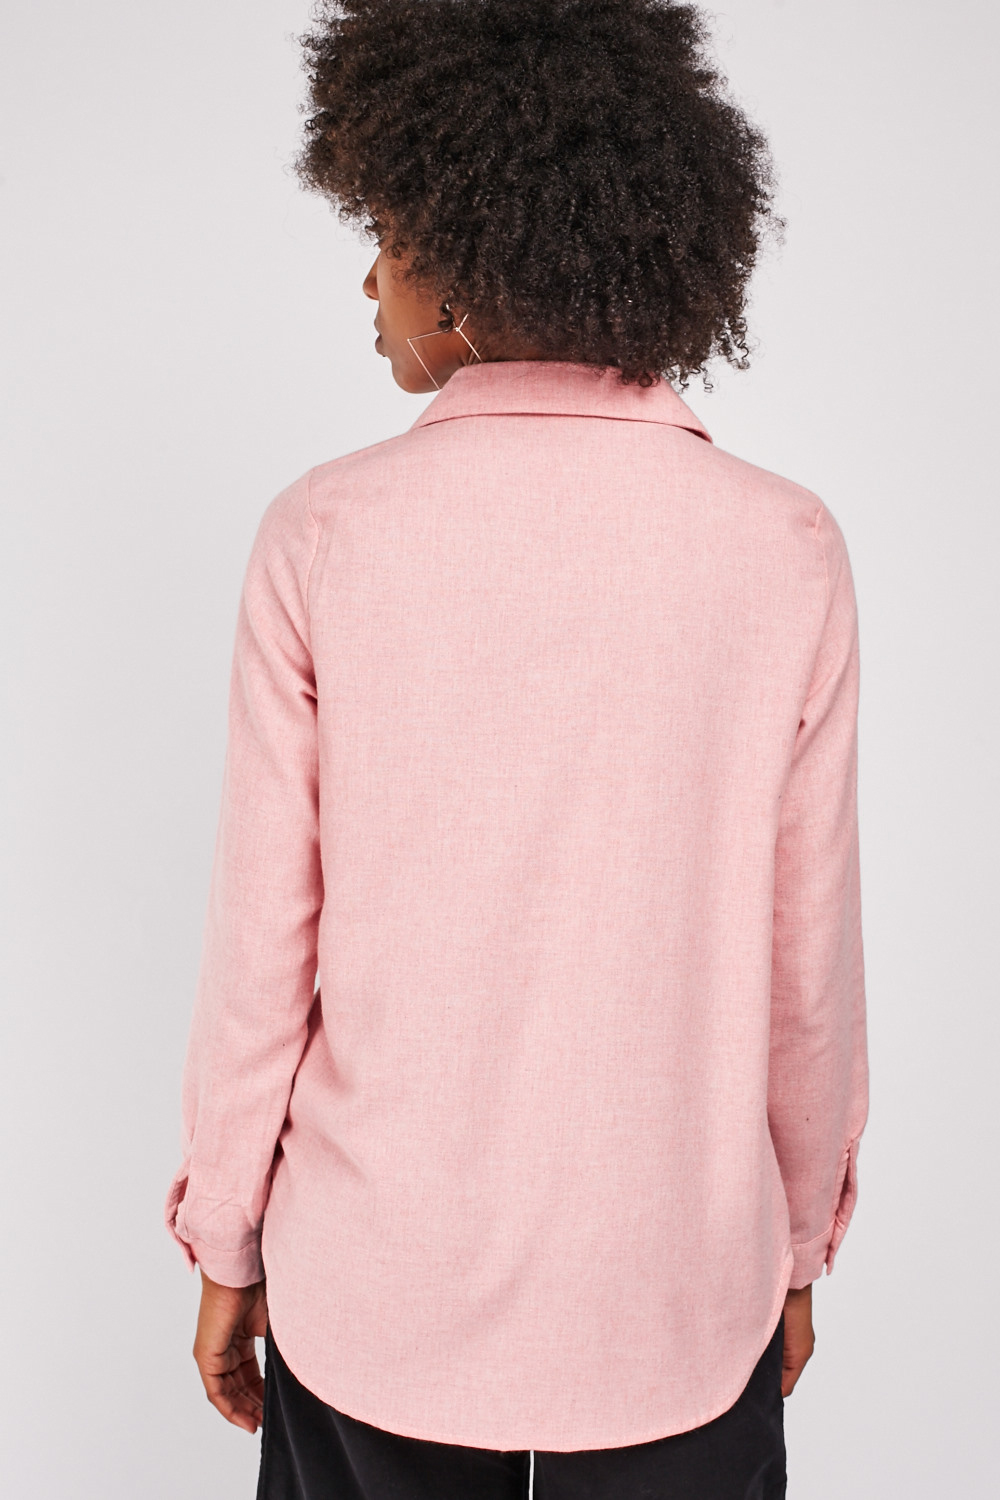 Sequin Overlay Shirt - Just $7